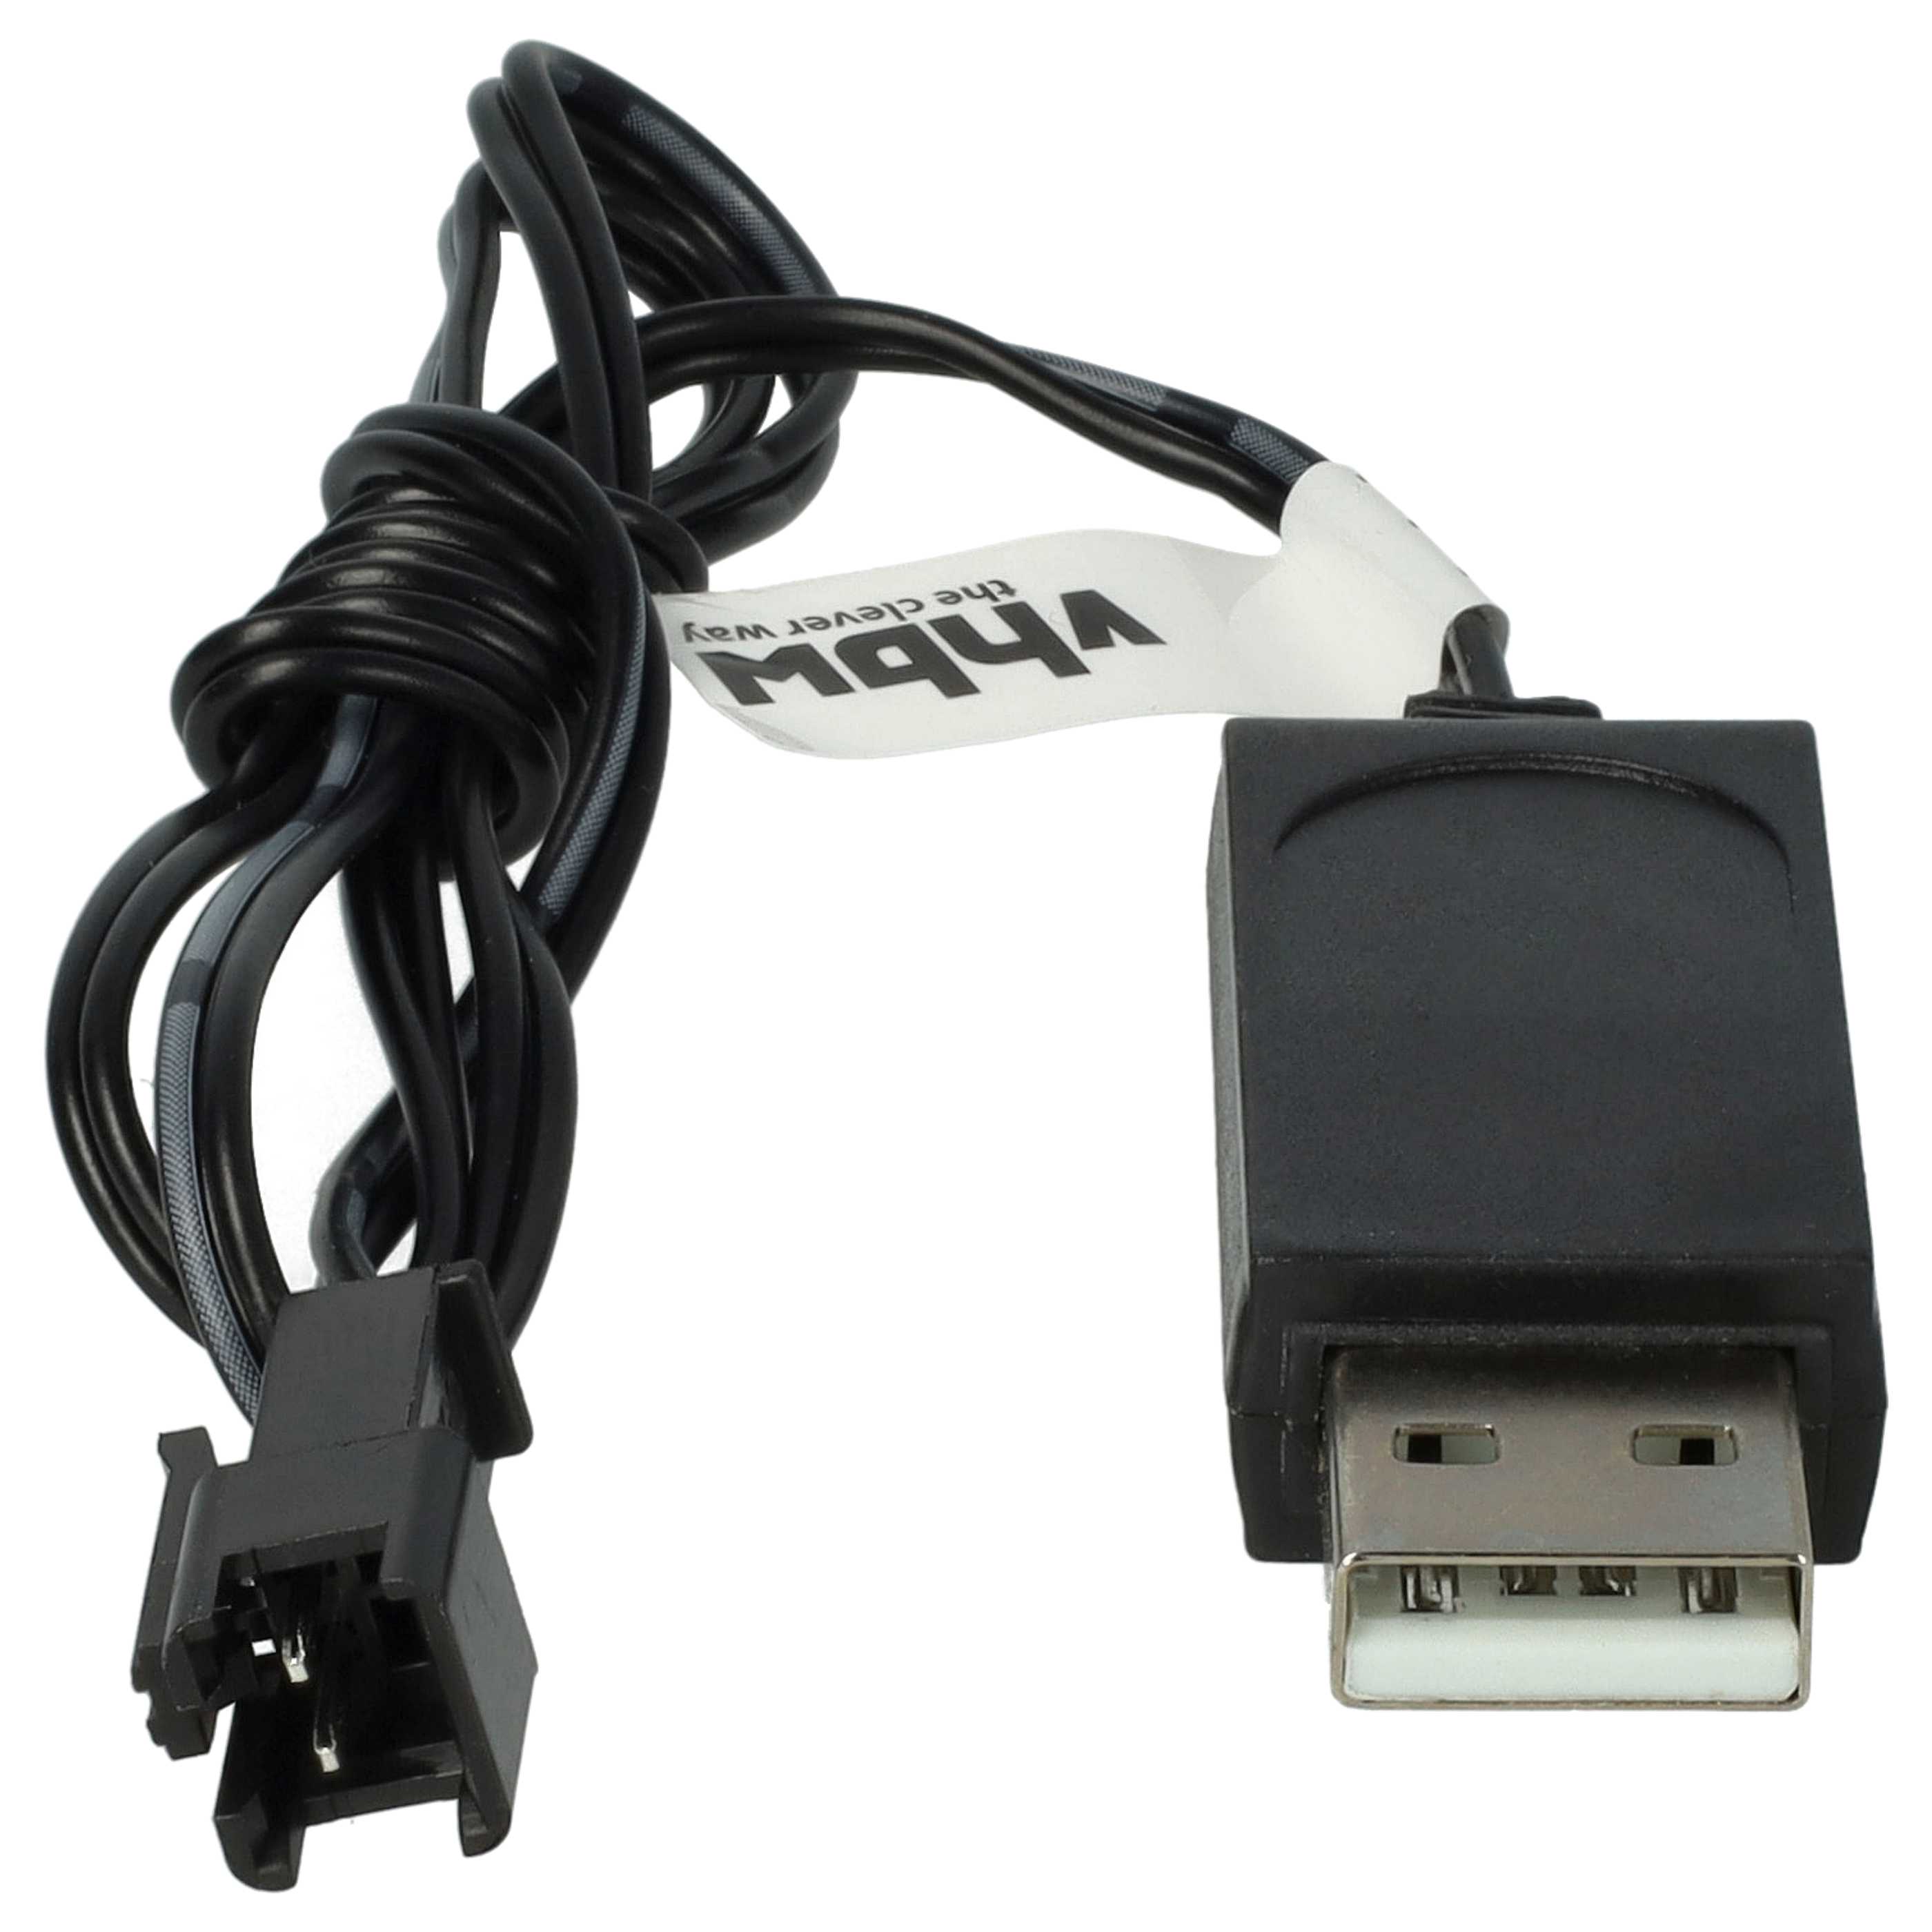 USB-Ladekabel passend für RC-Akkus mit SM-2P-Anschluss, RC-Modellbau Akkupacks - 60cm 4,8V